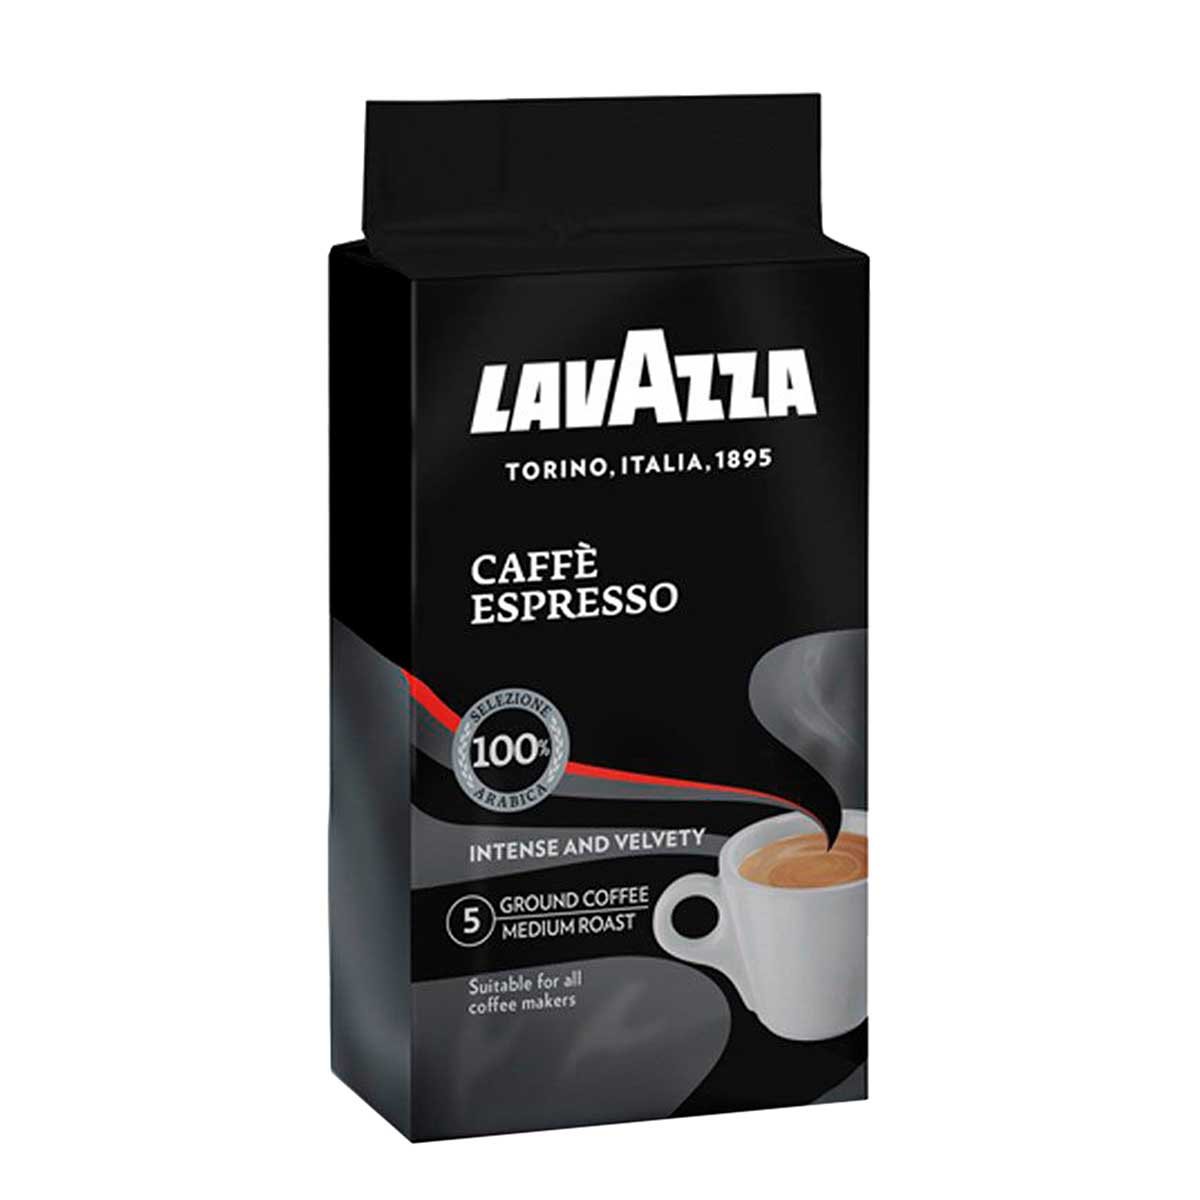 Кофе молотый 250гр. Кофе молотый Lavazza Espresso italiano Classico 250 г. Кофе молотый Lavazza Espresso 250 гр. Кофе Лавацца эспрессо молотый в/у 250г. Кофе Лавацца 250г кафе эспрессо молотый.